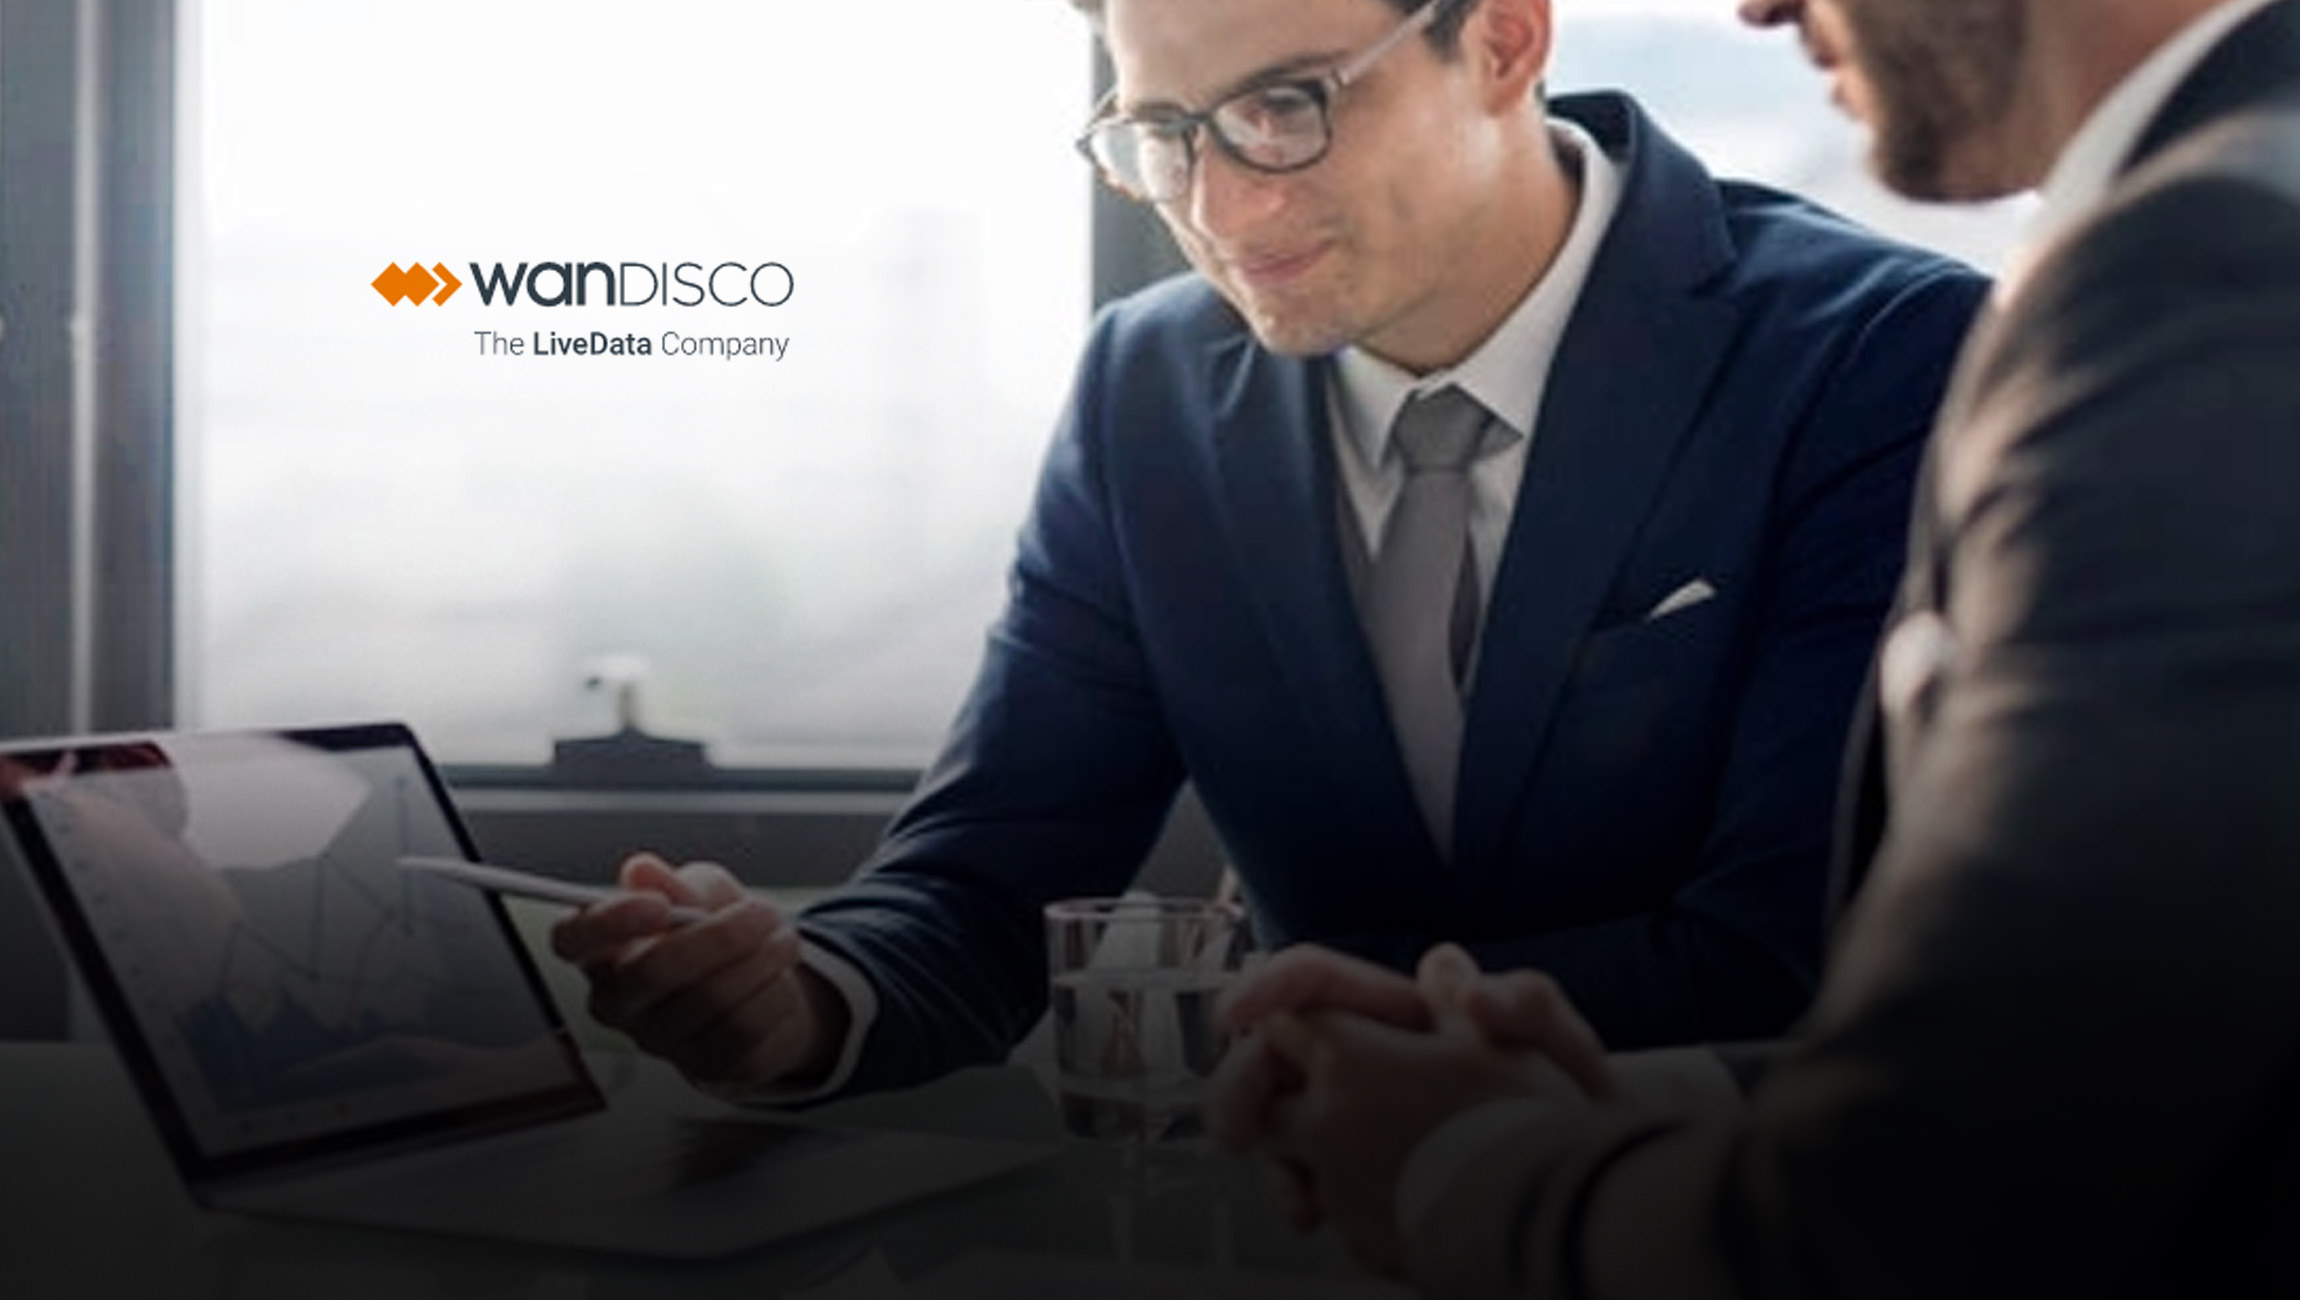 WANdisco-Solidifies-Market-Leadership-for-Live-Data_-Serving-150-Customers_-Managing-200-Petabytes